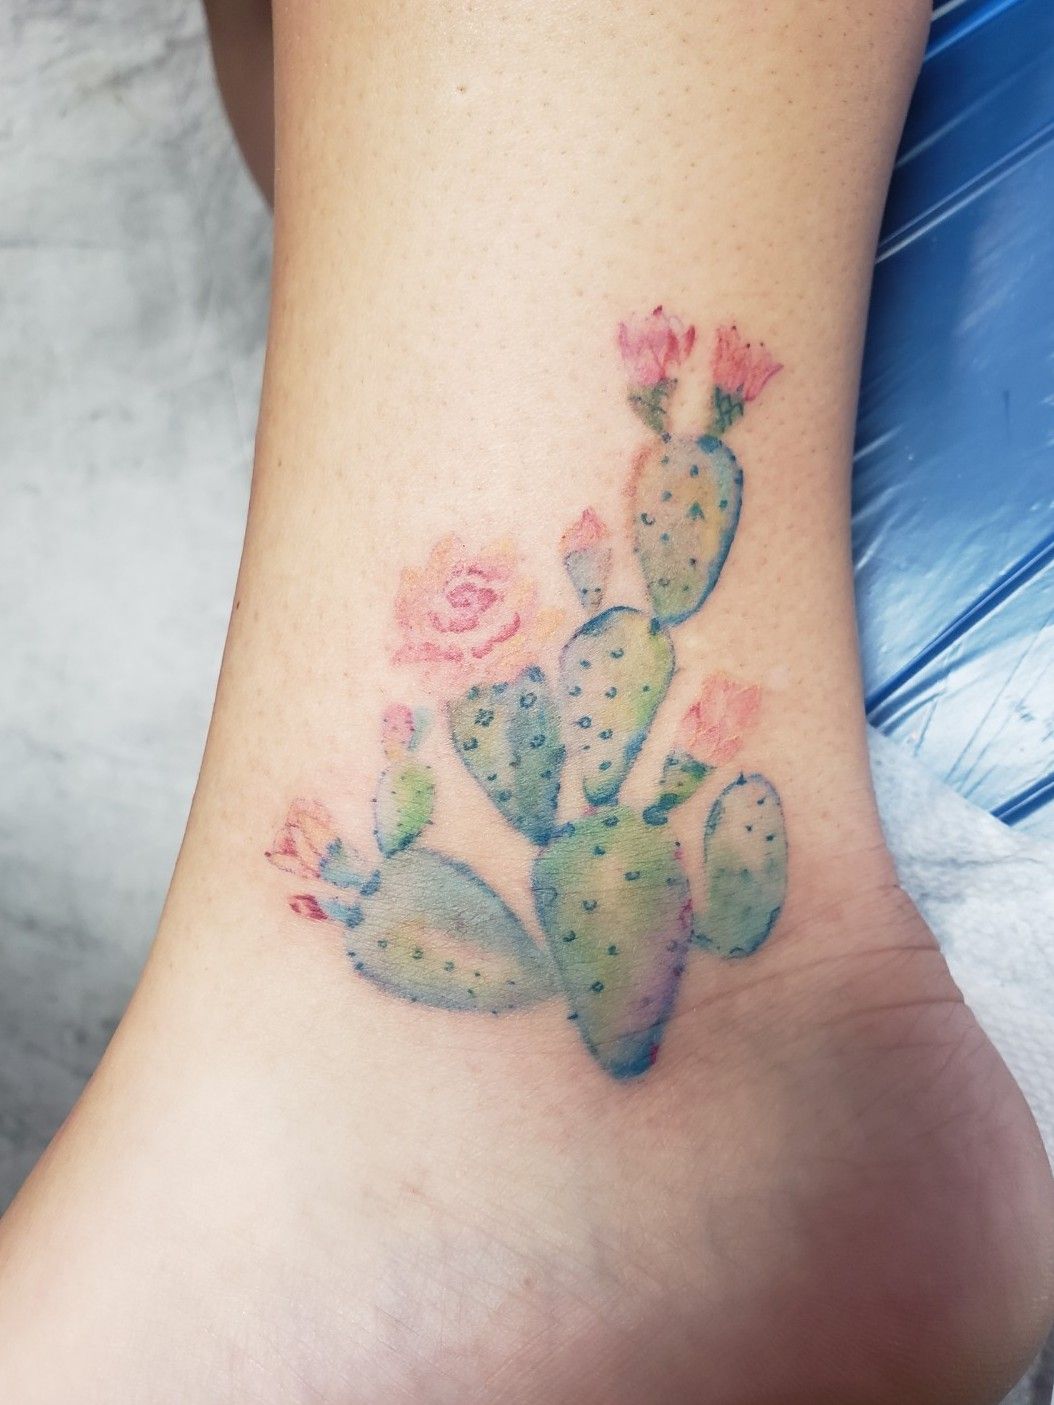 rachainsworth auf Twitter Prickly pear cactus  Thank you so much  Patricia       rachainsworth tattooartist tattoo armtattoo  botanicaltattoo cactustattoo pricklypear cactus blacktattoo  finelinetattoo linetattoo lines 